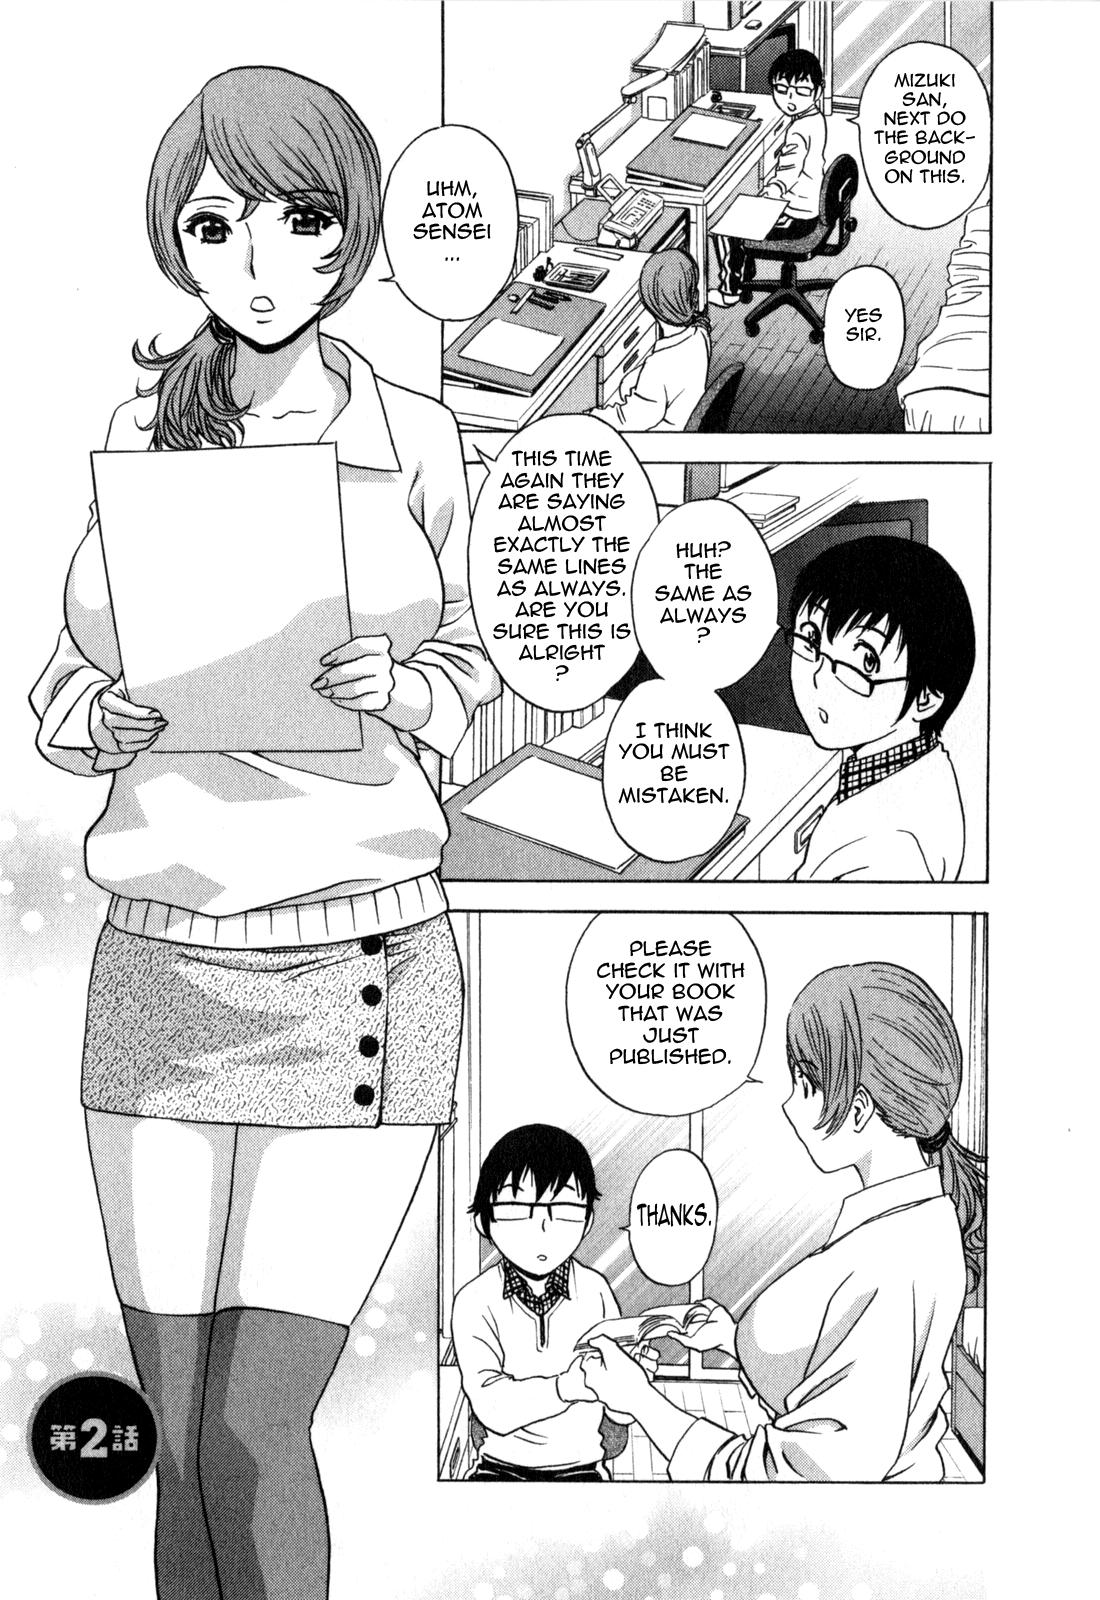 [Hidemaru] Life with Married Women Just Like a Manga 3 - Ch. 1-6 [English] {Tadanohito} 27